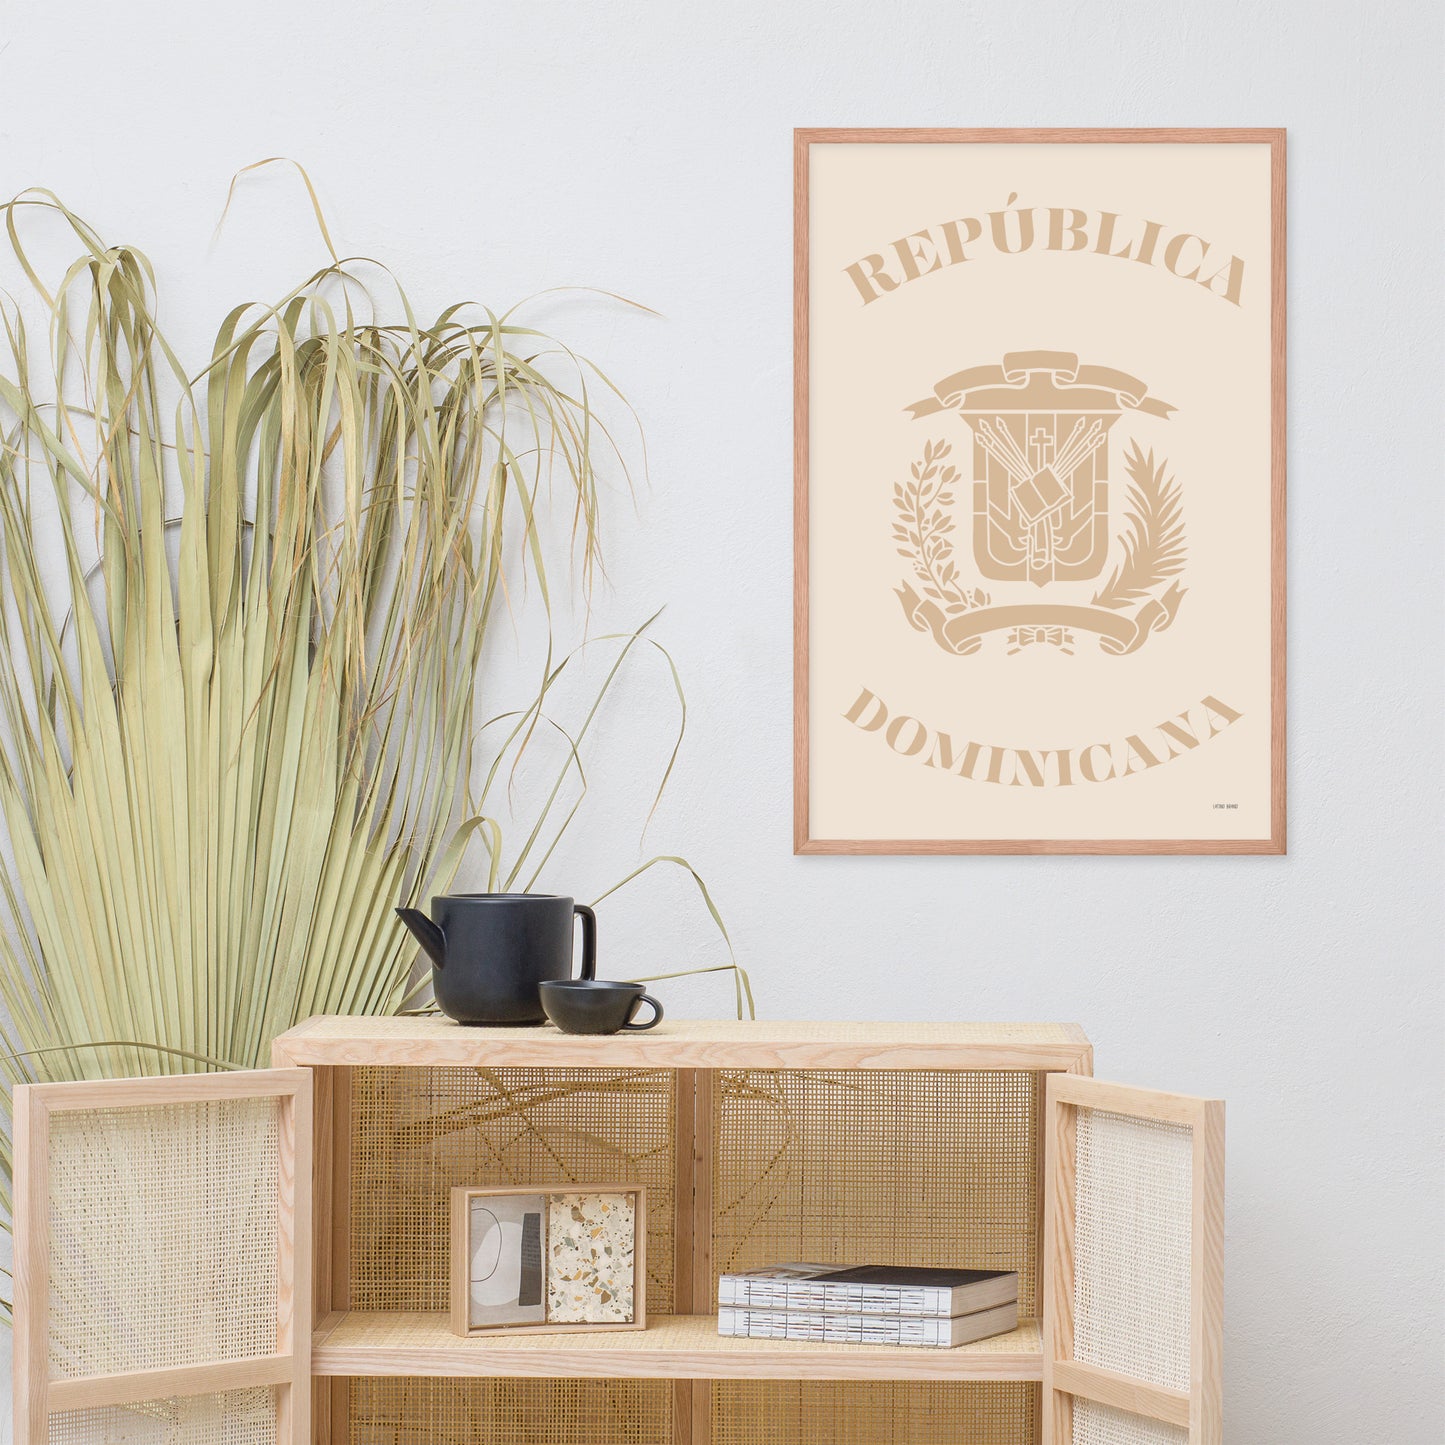 🇩🇴 Republica Dominicana Framed Print